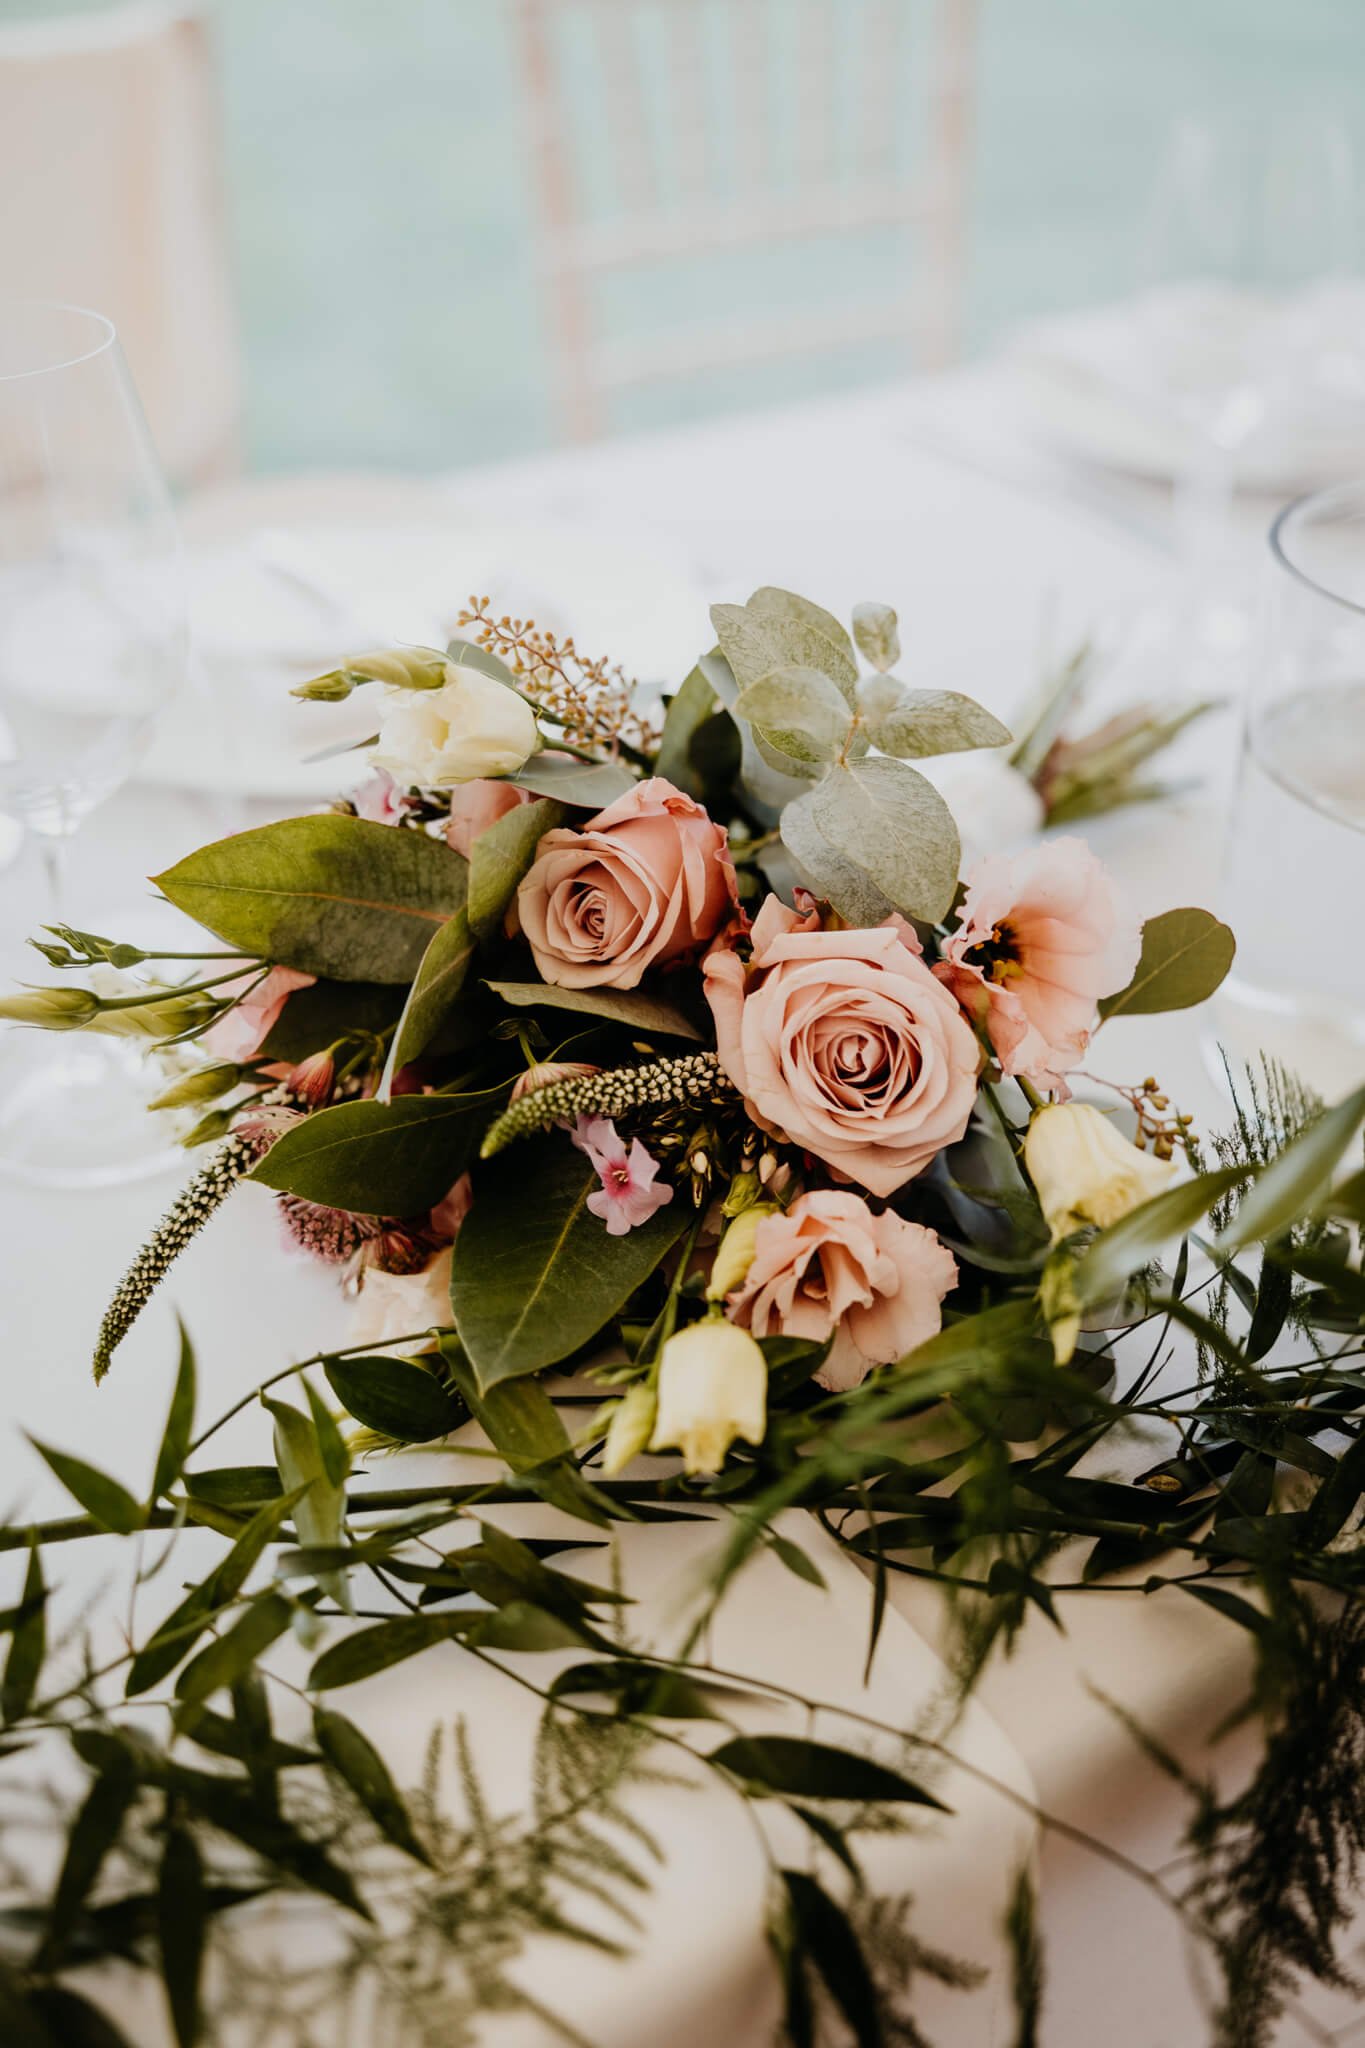 Beth-Shean-Wedding-flowers-2.jpg